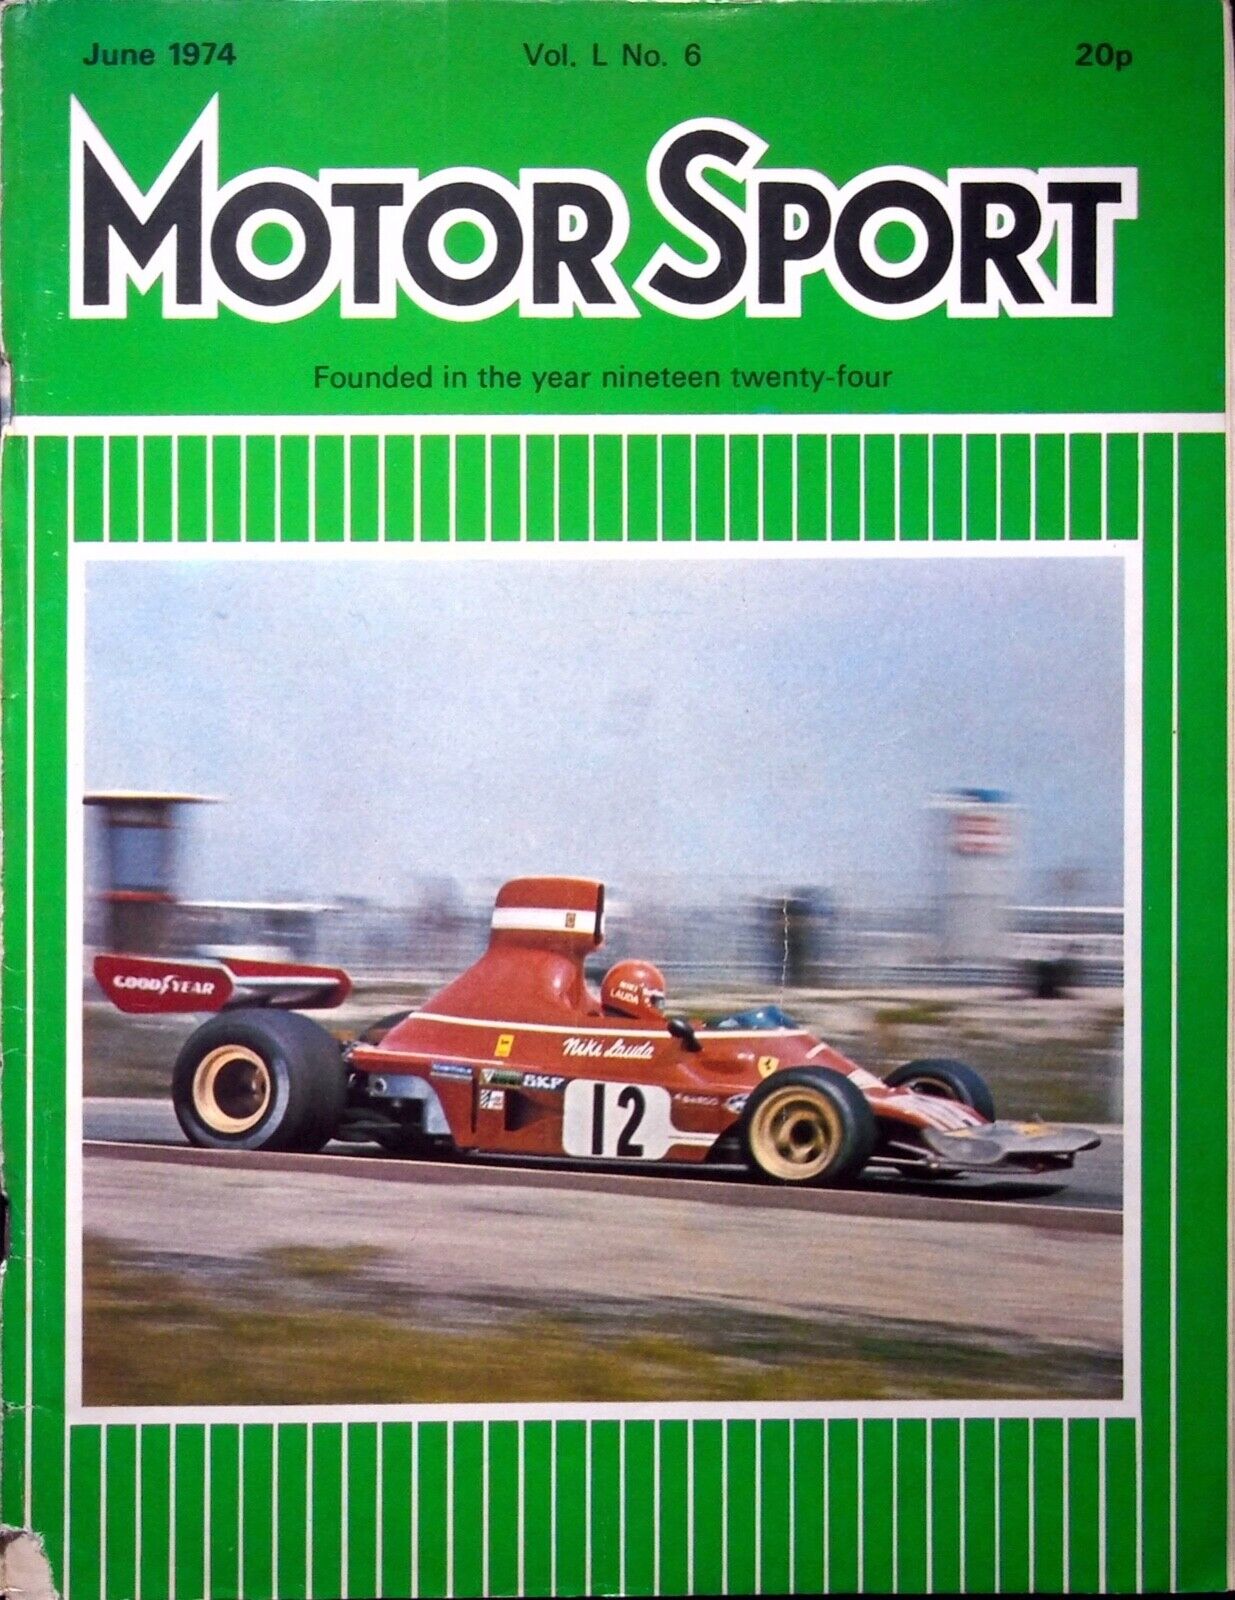 VINTAGE SPANISH GRAND PRIX RACE - MOTOR SPORT MAGAZINE, JUNE 1974 VOL. L NO. 6